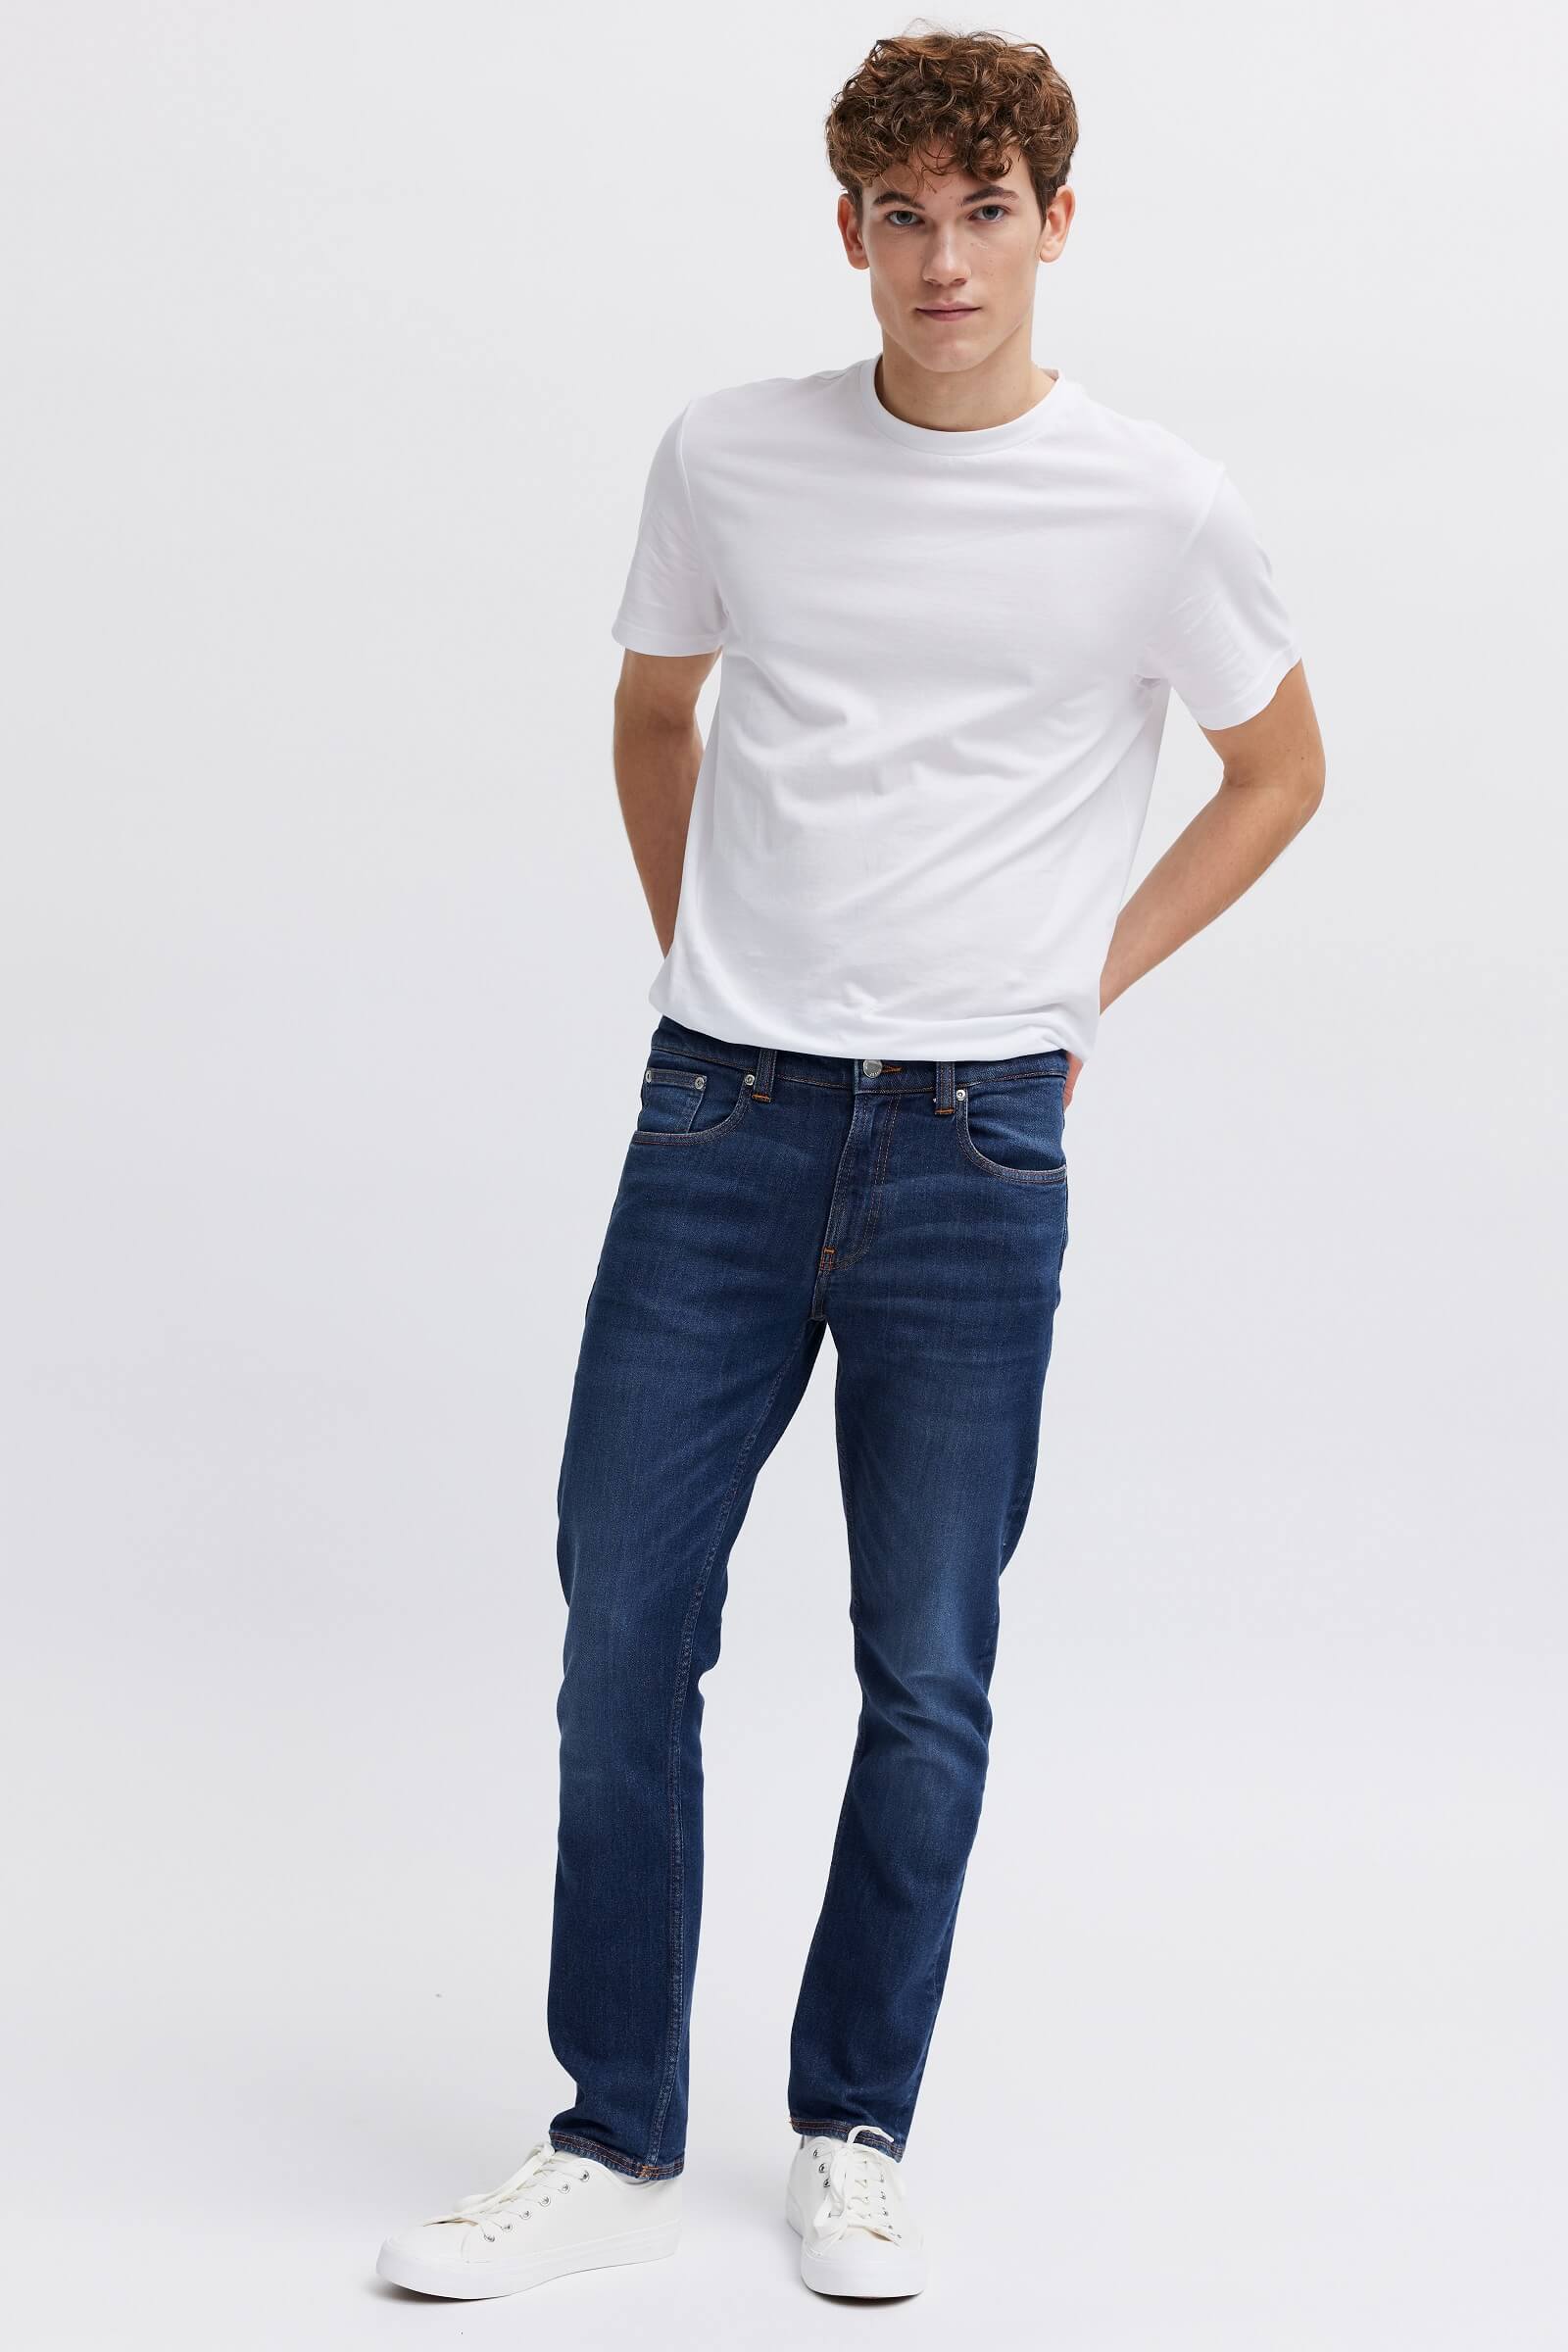 Organic stylish jeans for men - blue denim